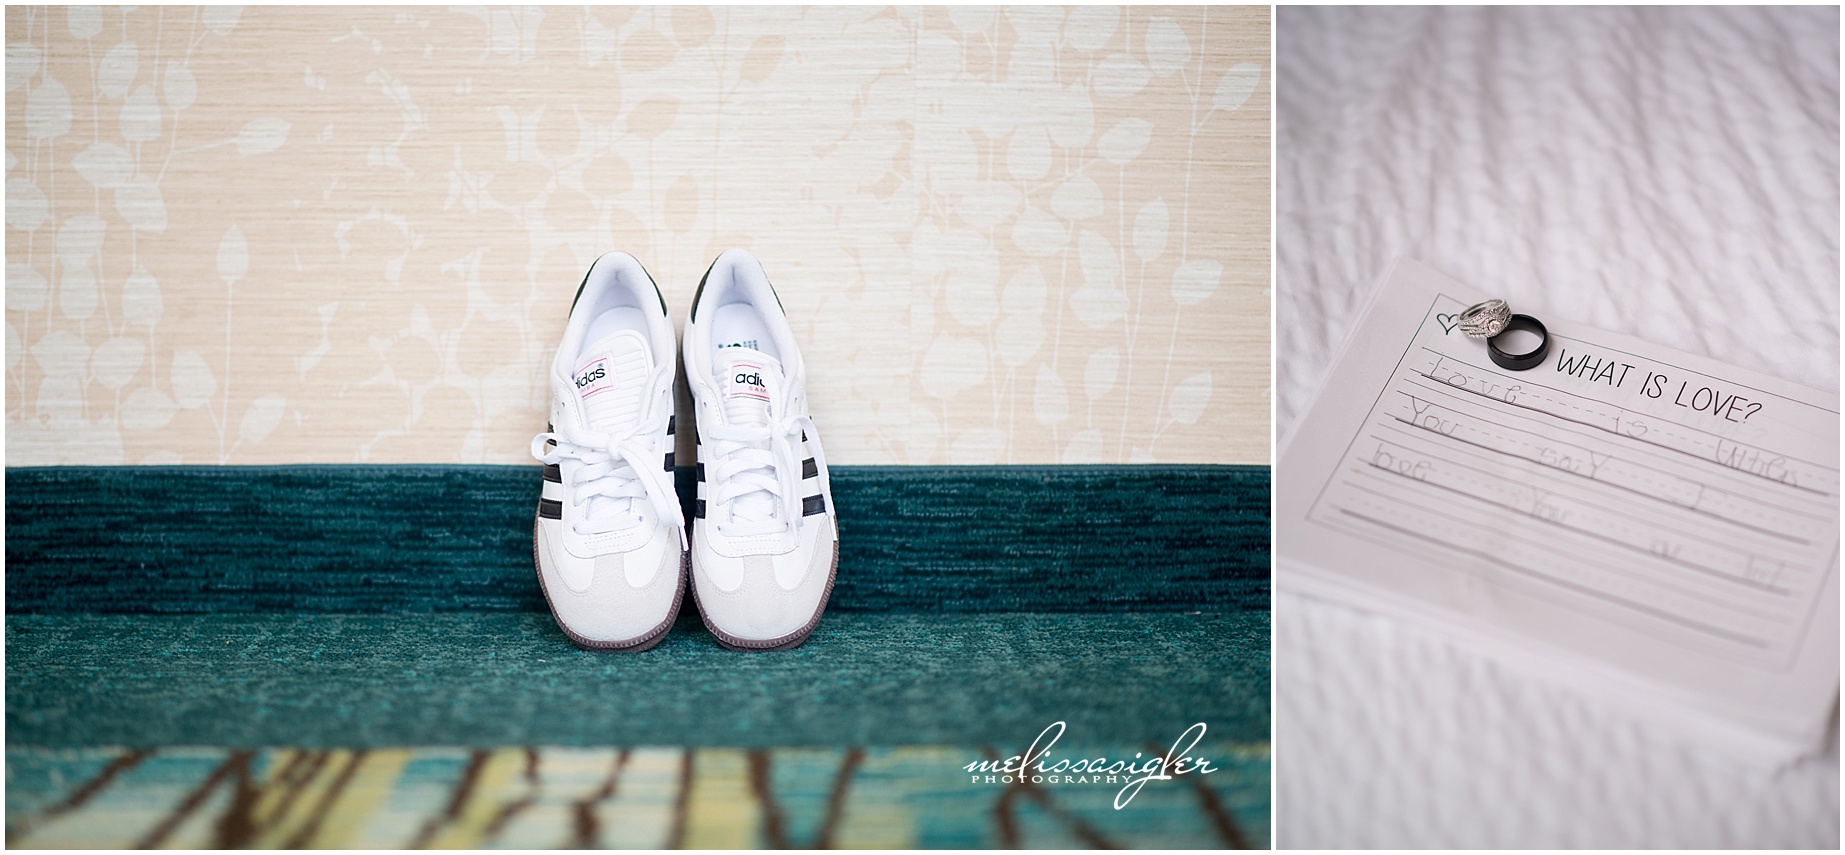 Bridal tennis shoes by wedding photographer Melissa Sigler